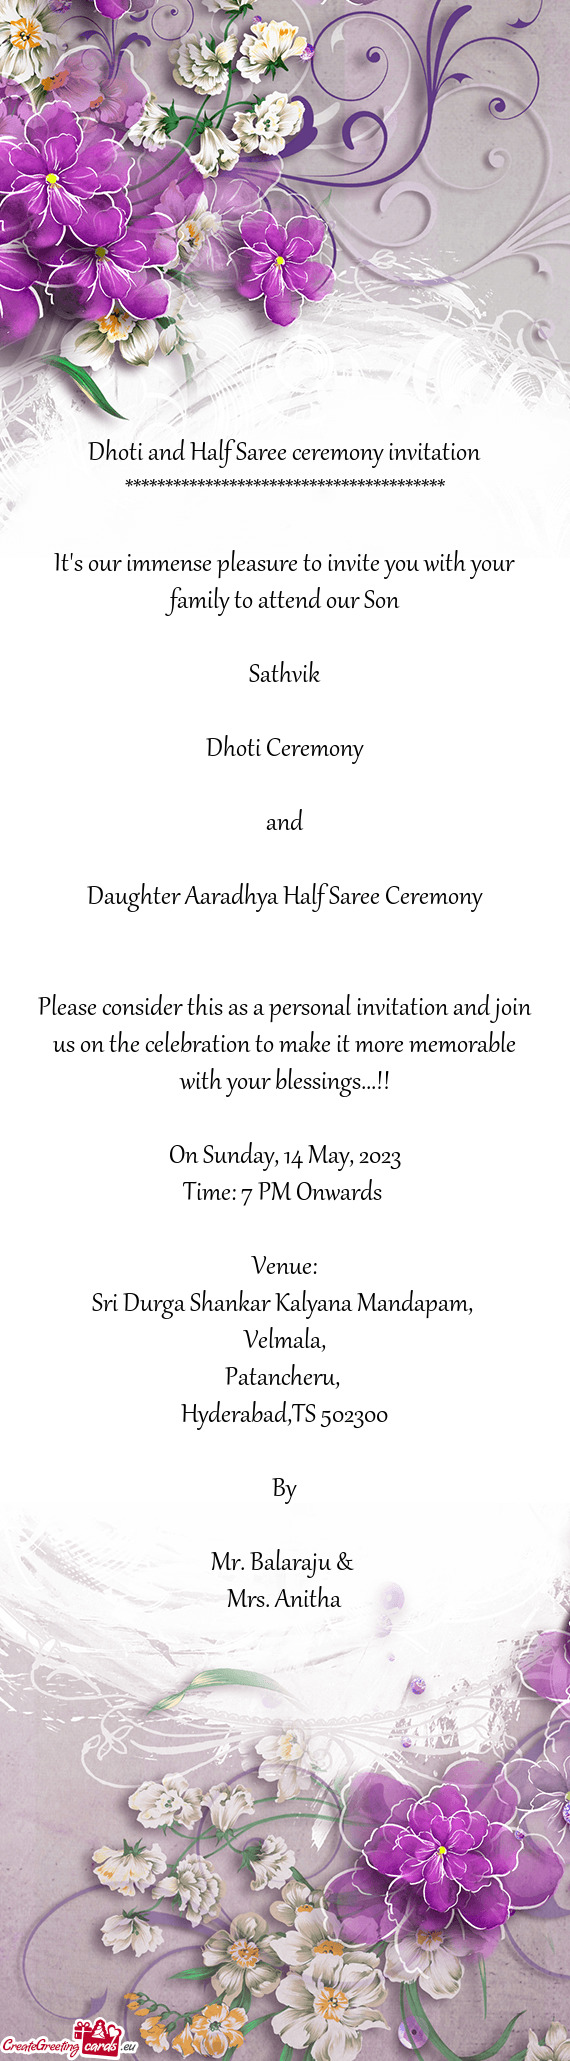 Daughter Aaradhya Half Saree Ceremony